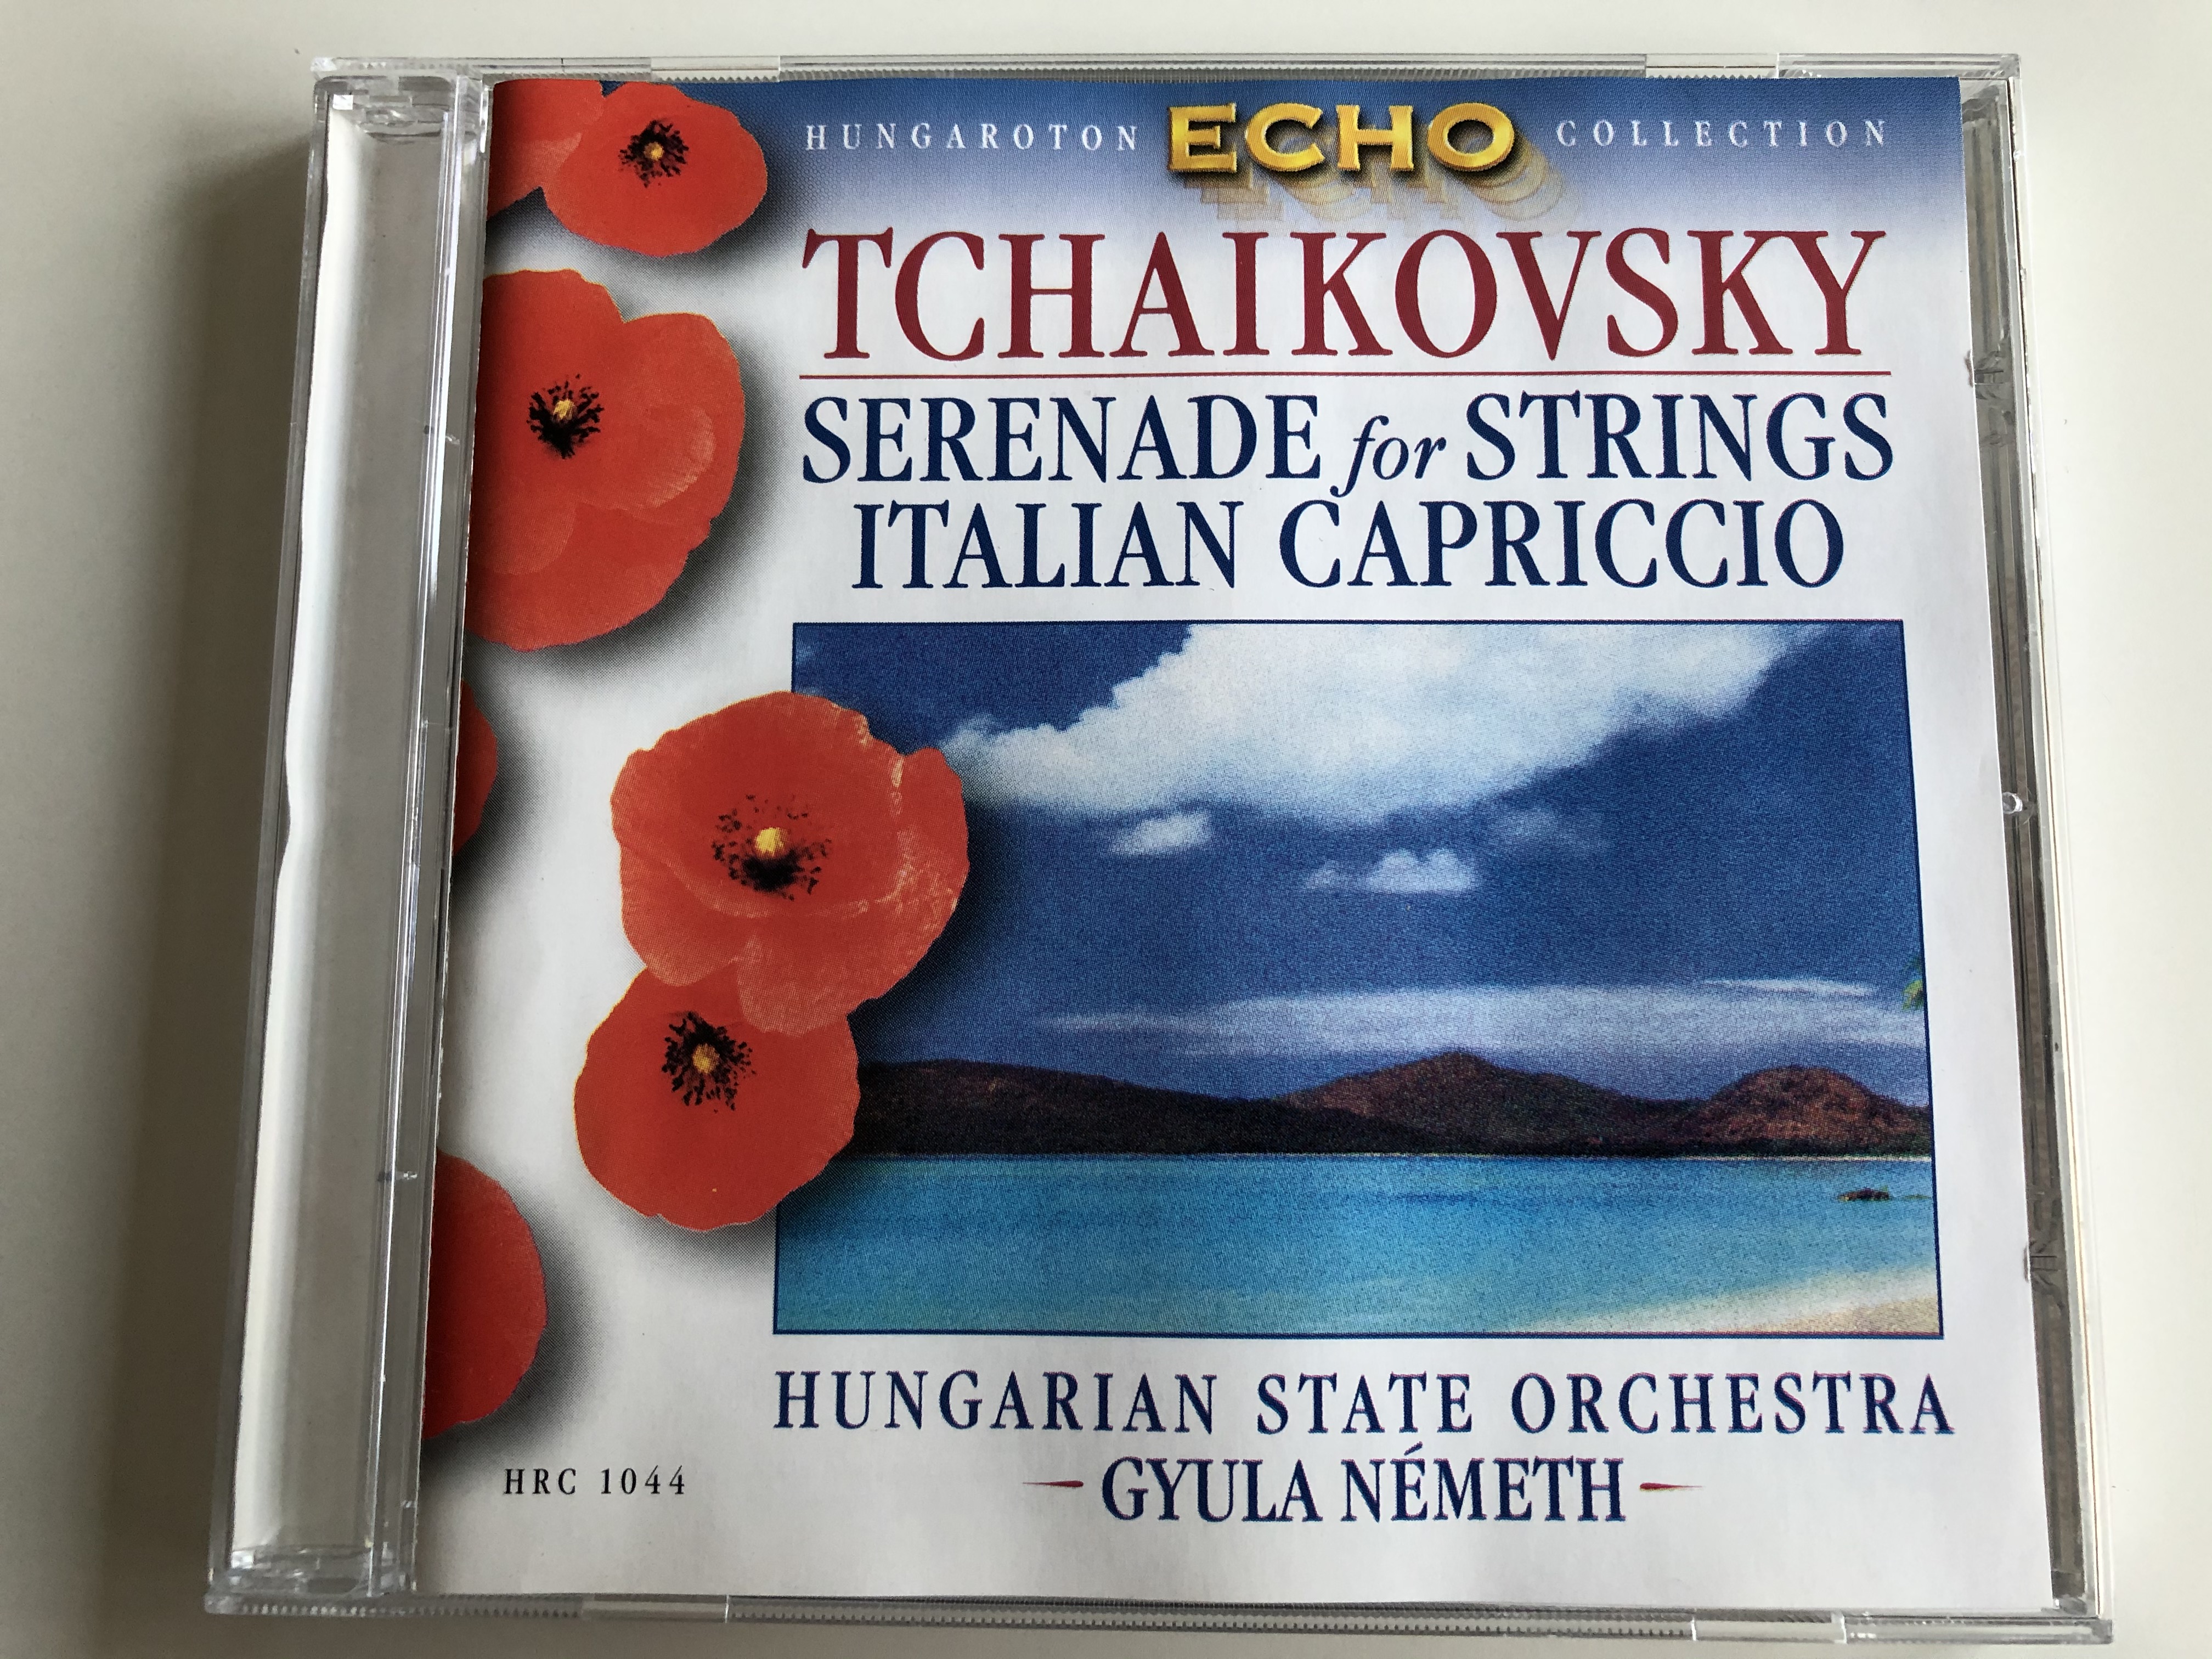 tchaikovsky-serenade-for-strings-italian-capriccio-hungarian-state-orchestra-gyula-nemeth-hungaroton-classic-audio-cd-1969-stereo-hrc-1044-1-.jpg